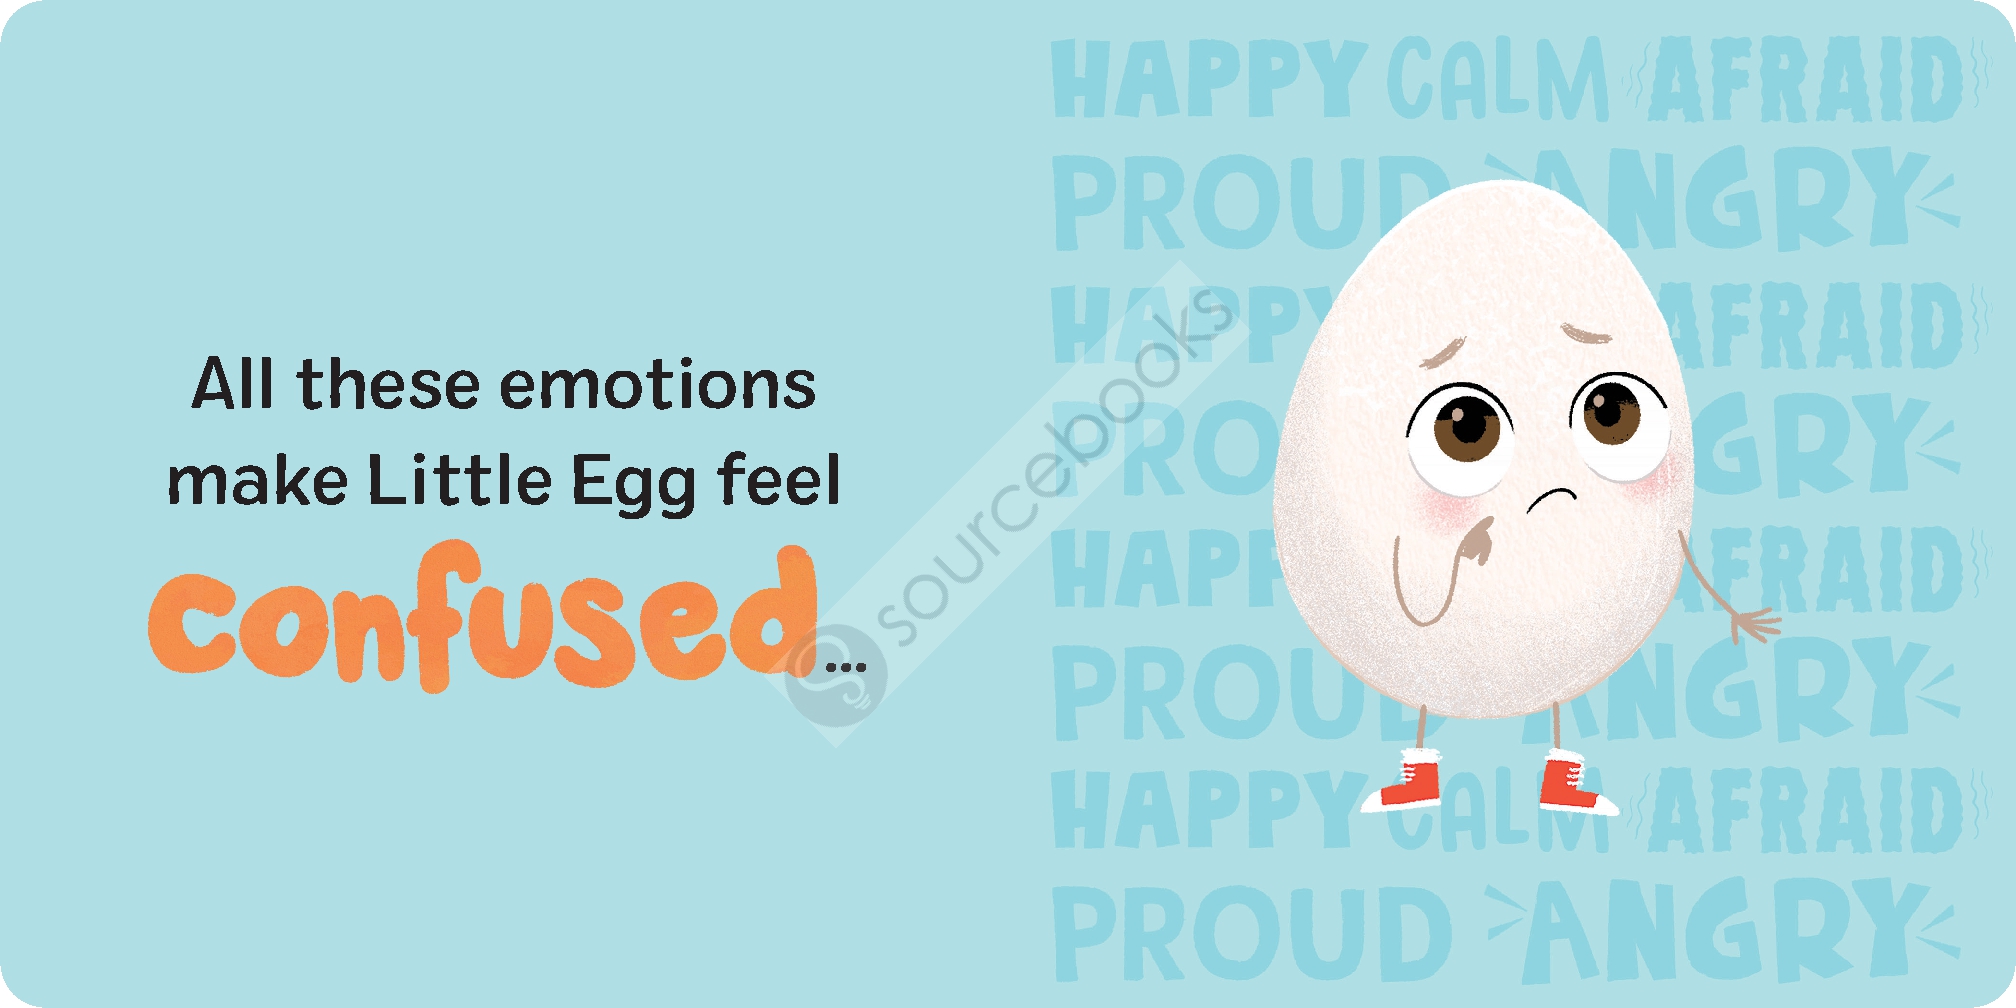 Little Egg: An Eggcellent Book of Emotions